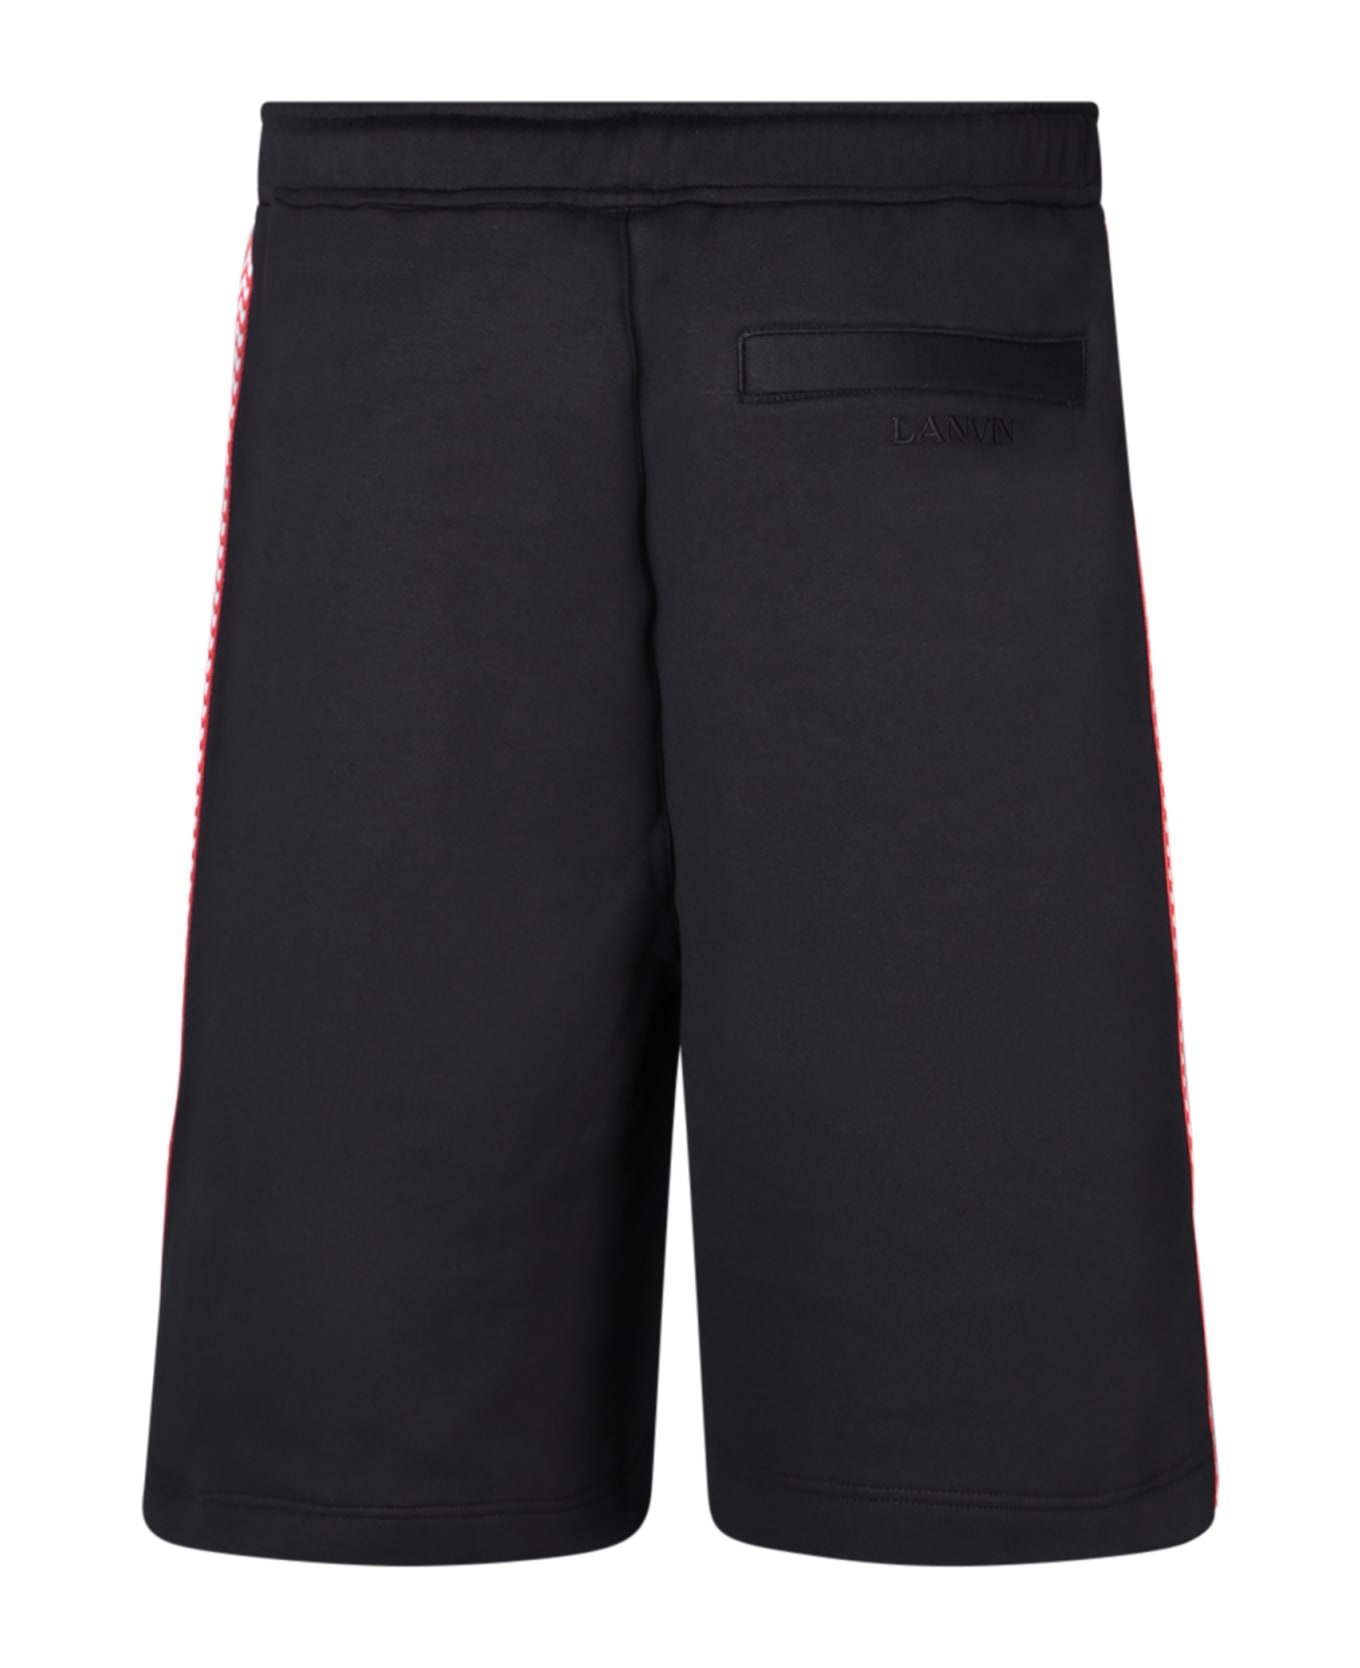 Lanvin 'side Curb' Bermuda Shorts - Black